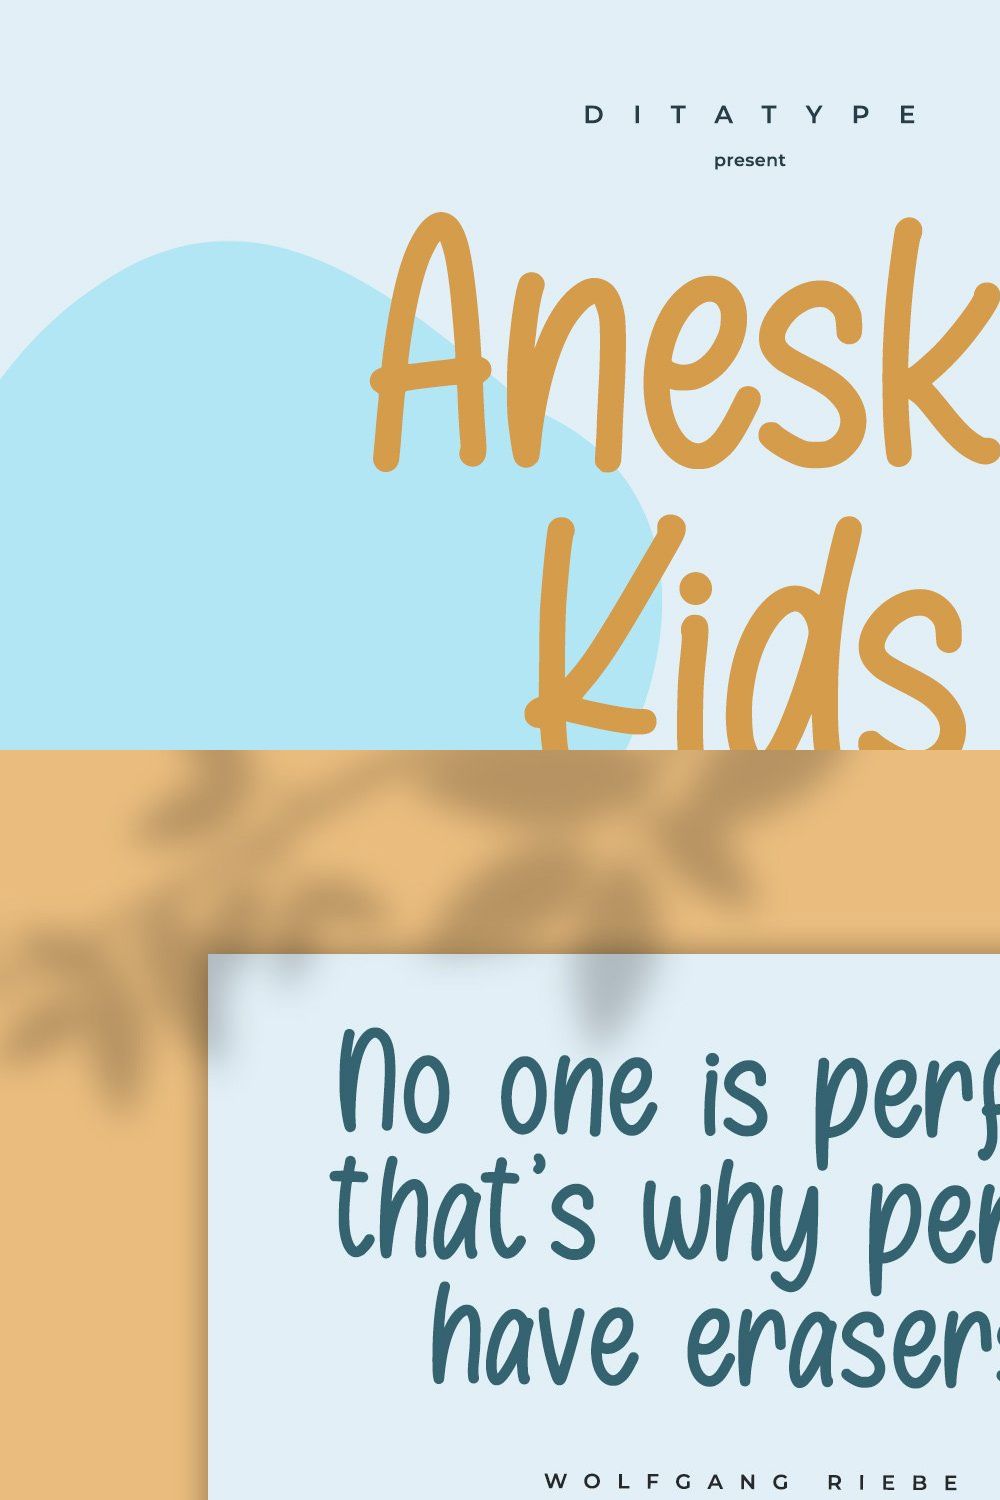 Aneska Kids pinterest preview image.